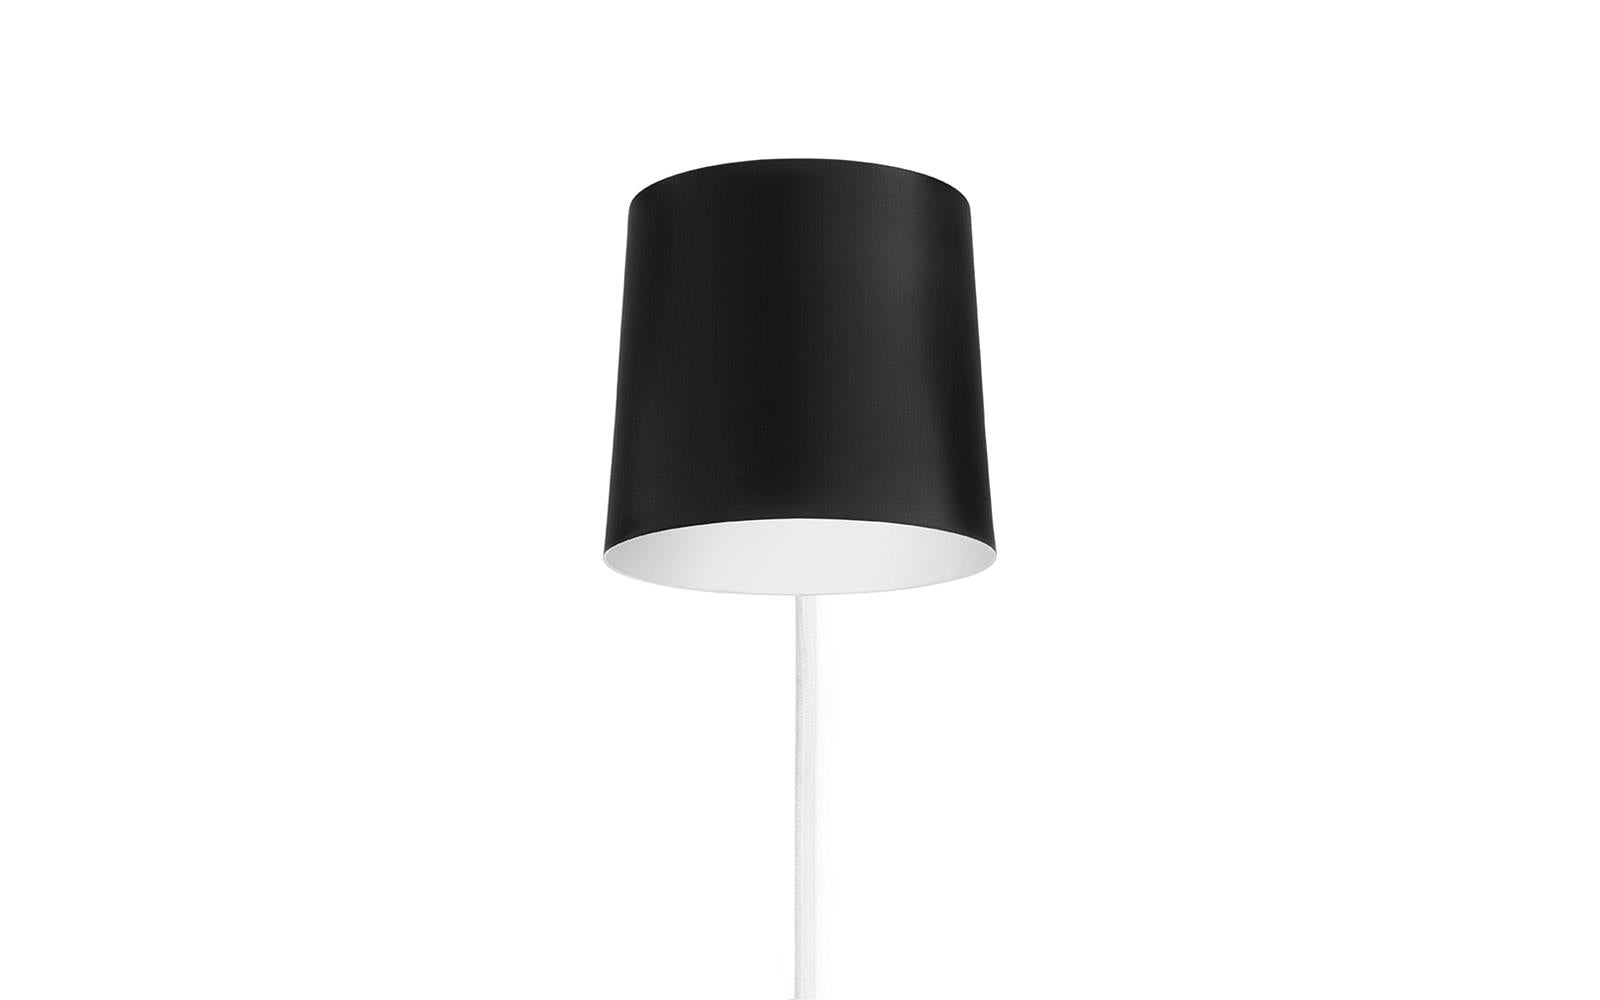 Rise lamp North American version Black